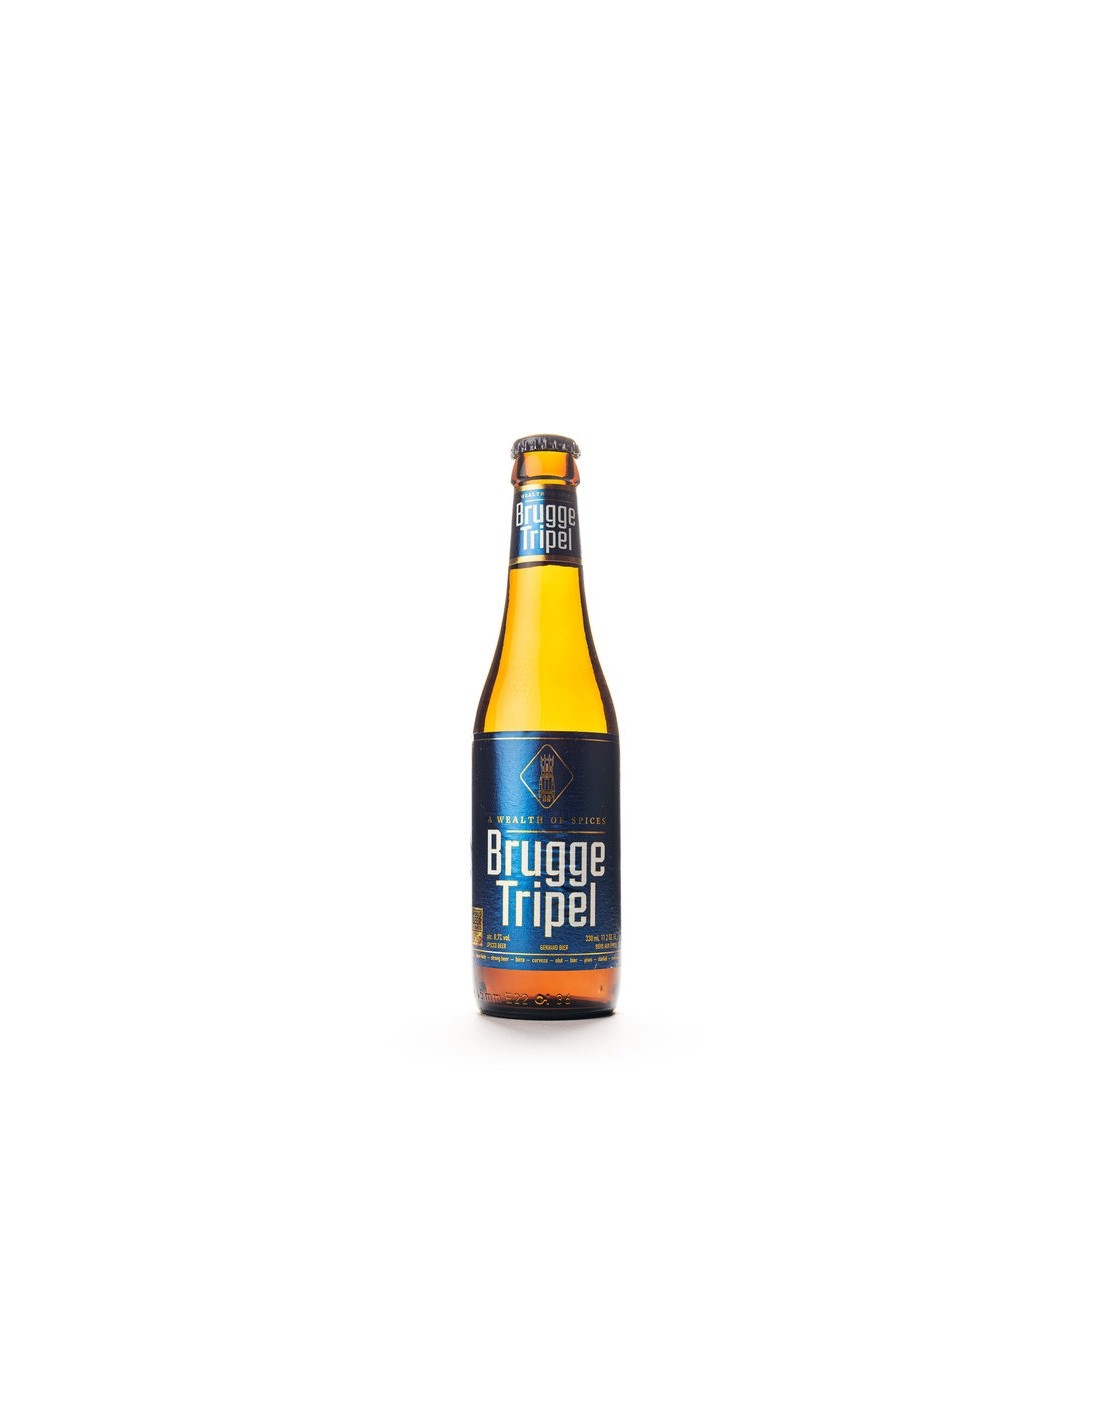 Bere blonda Brugge, 8.7% alc., 0.33L, Belgia alcooldiscount.ro